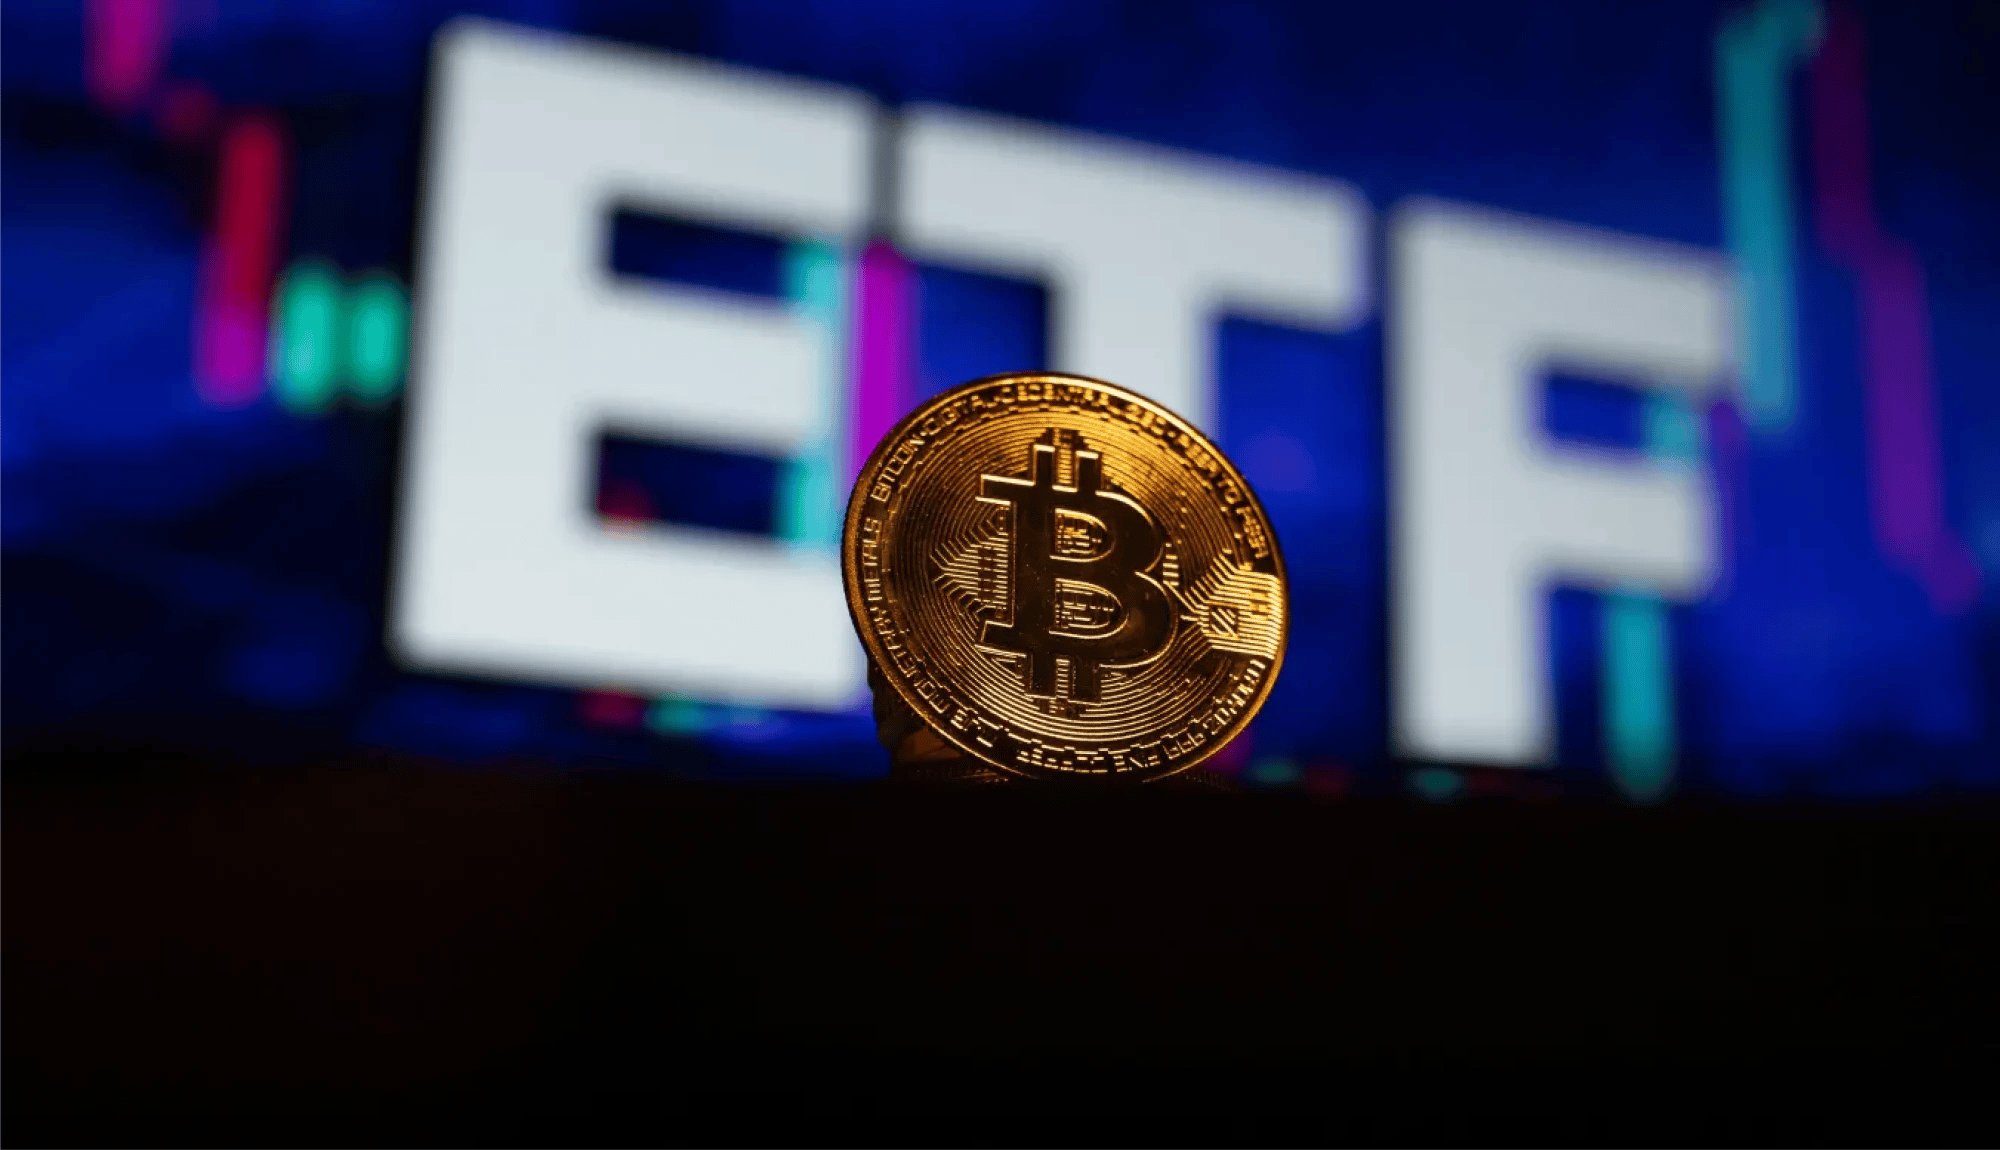 Spot Bitcoin ETF: High Trading Volume on Debut